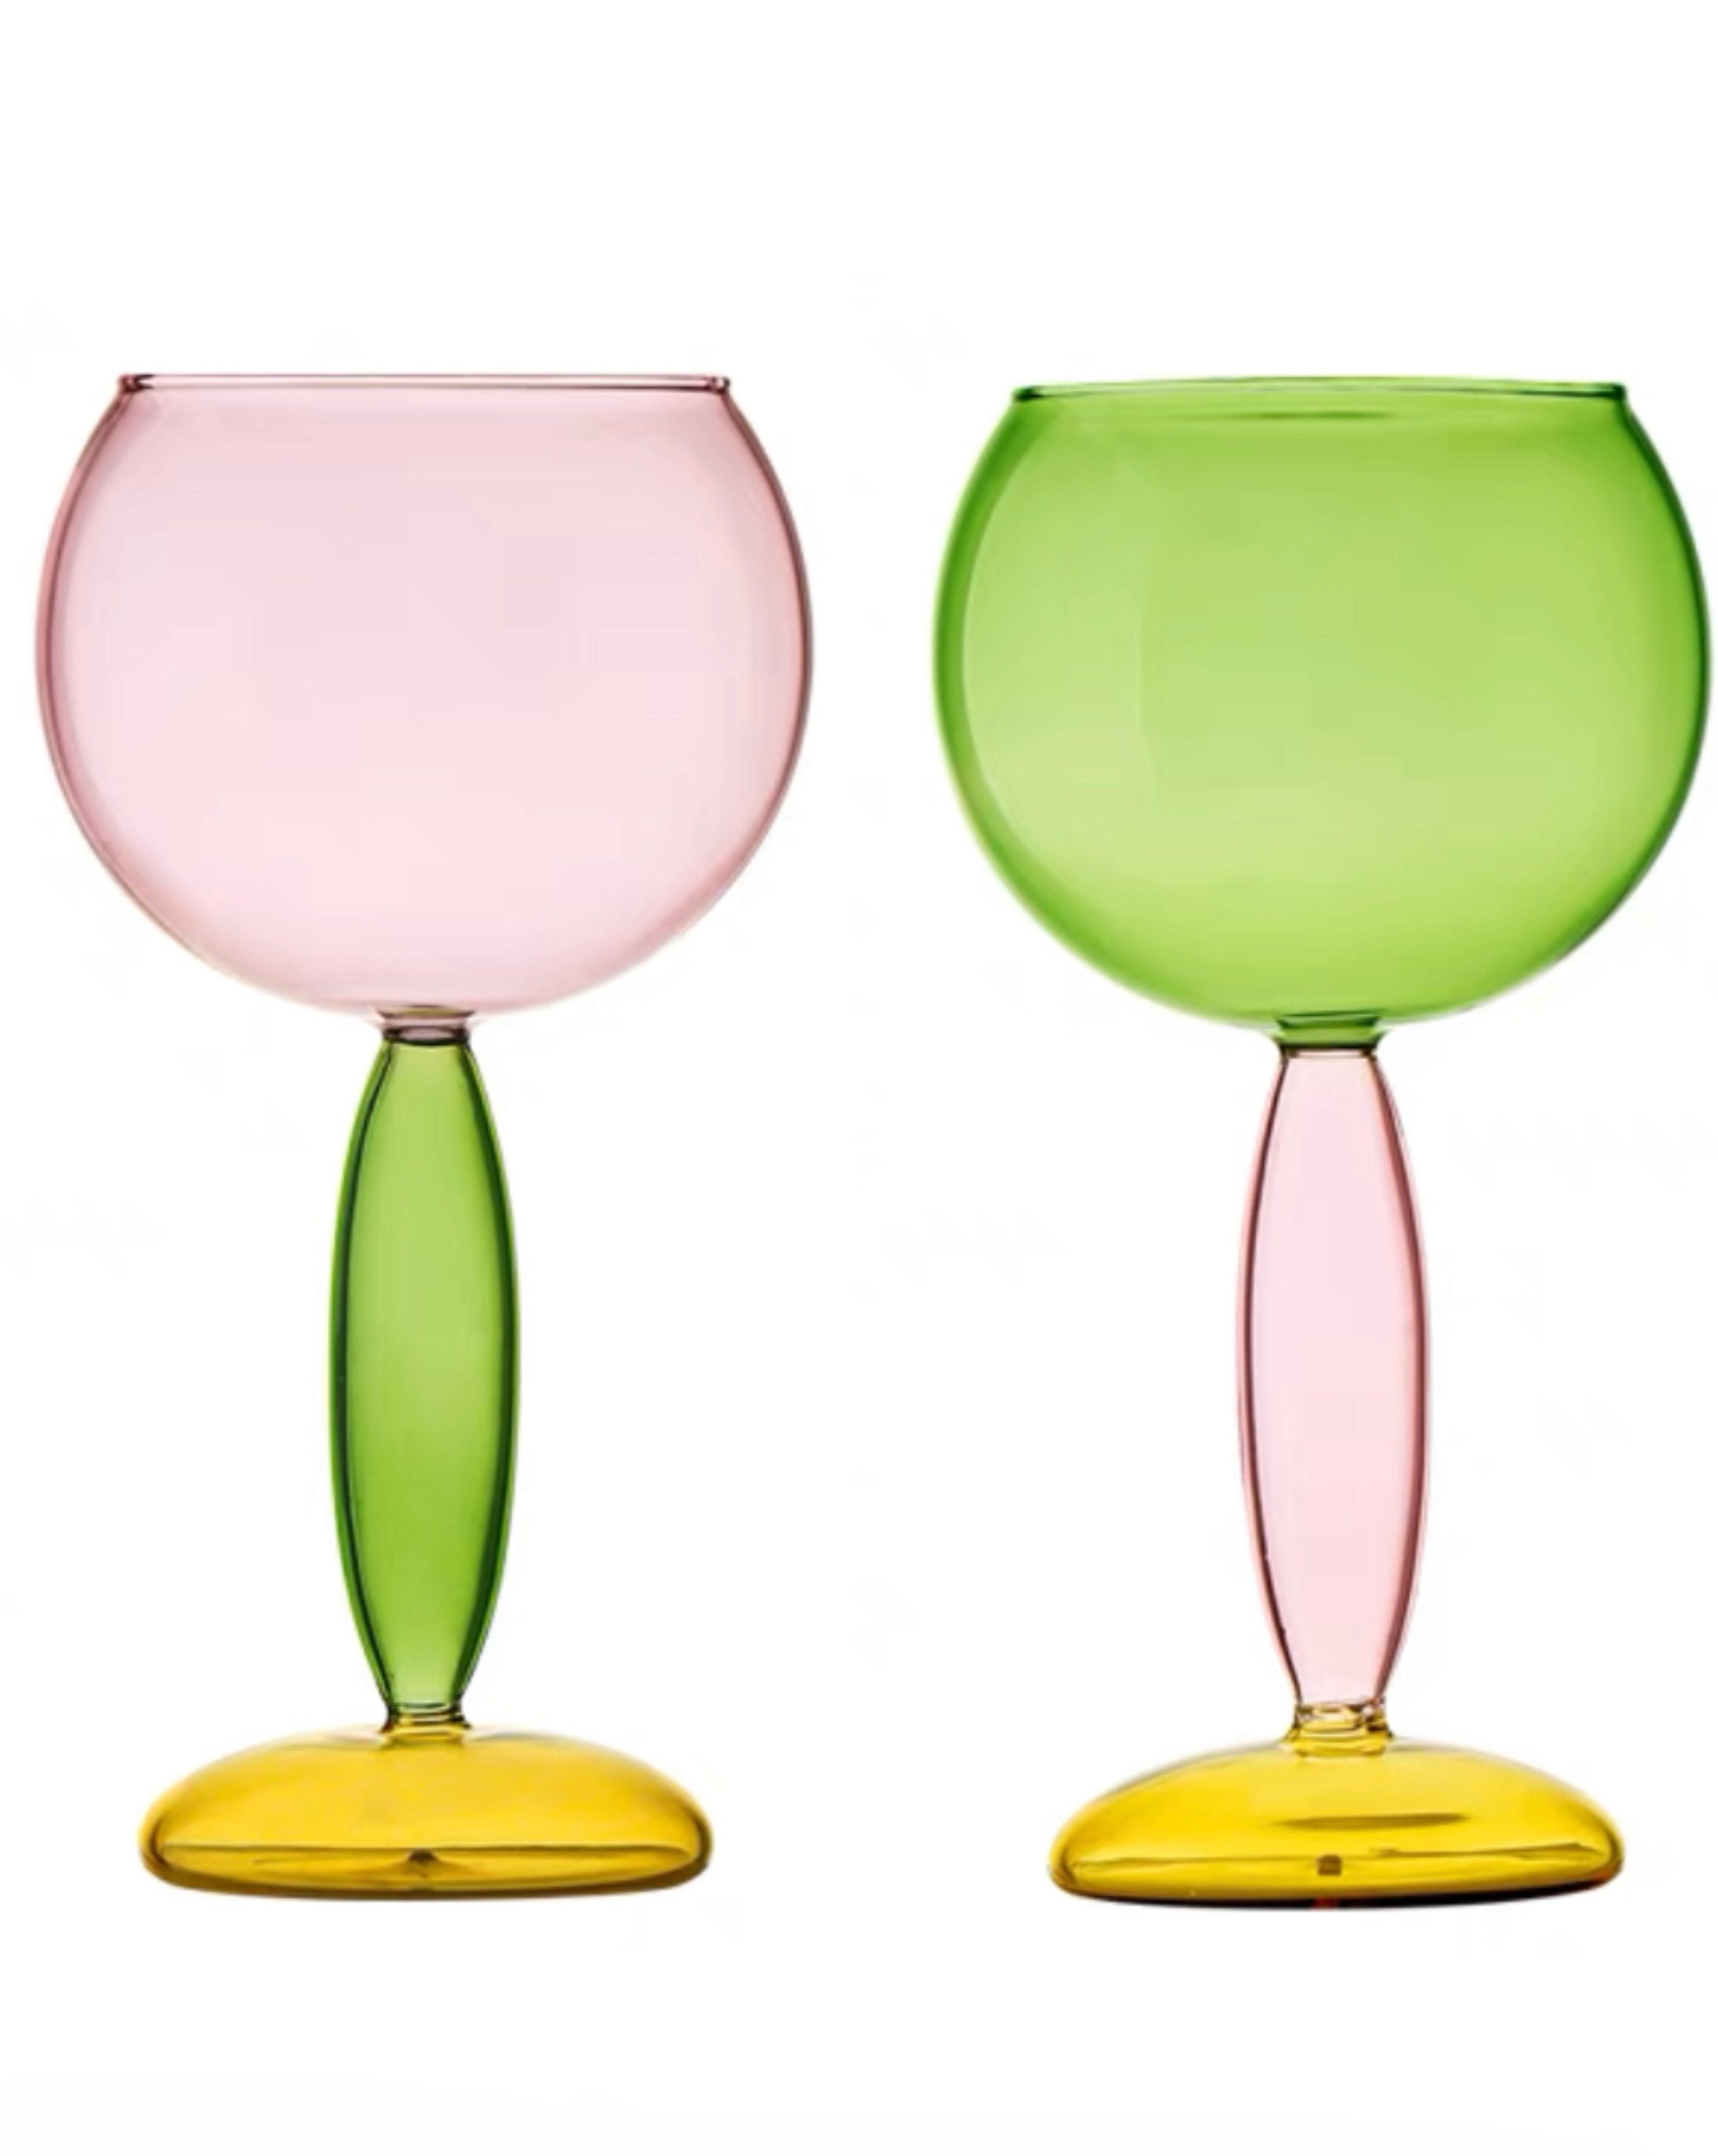 Handblown Colored Burgundy / Bordeaux Wine Glasses Set ( 2 Pcs, $24.9 / Each ) - Colored Burgundy / Bordeaux Wine Glasses Set-Burgundy - Vineyard - INSPECIAL HOME